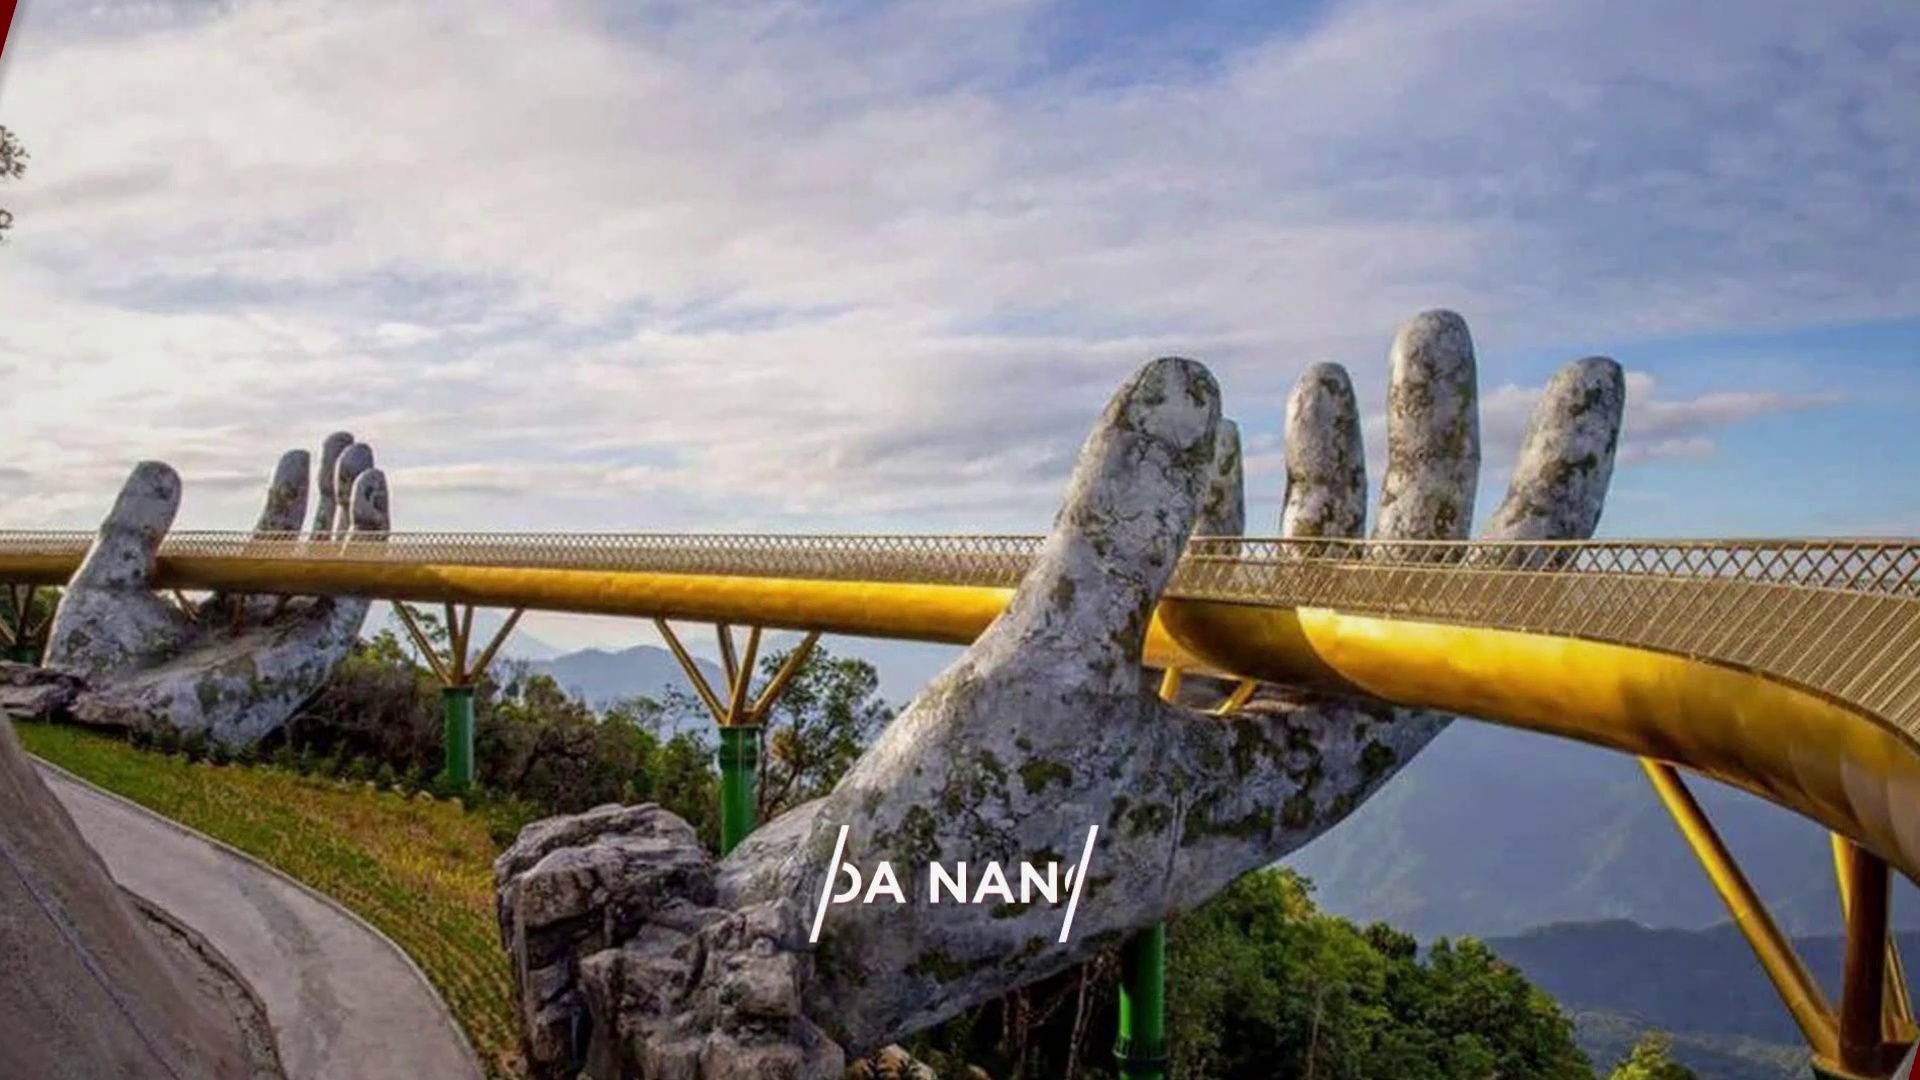 “DA NANG” Top 55 Tourist Places | Da Nang Tourism | VIETNAM